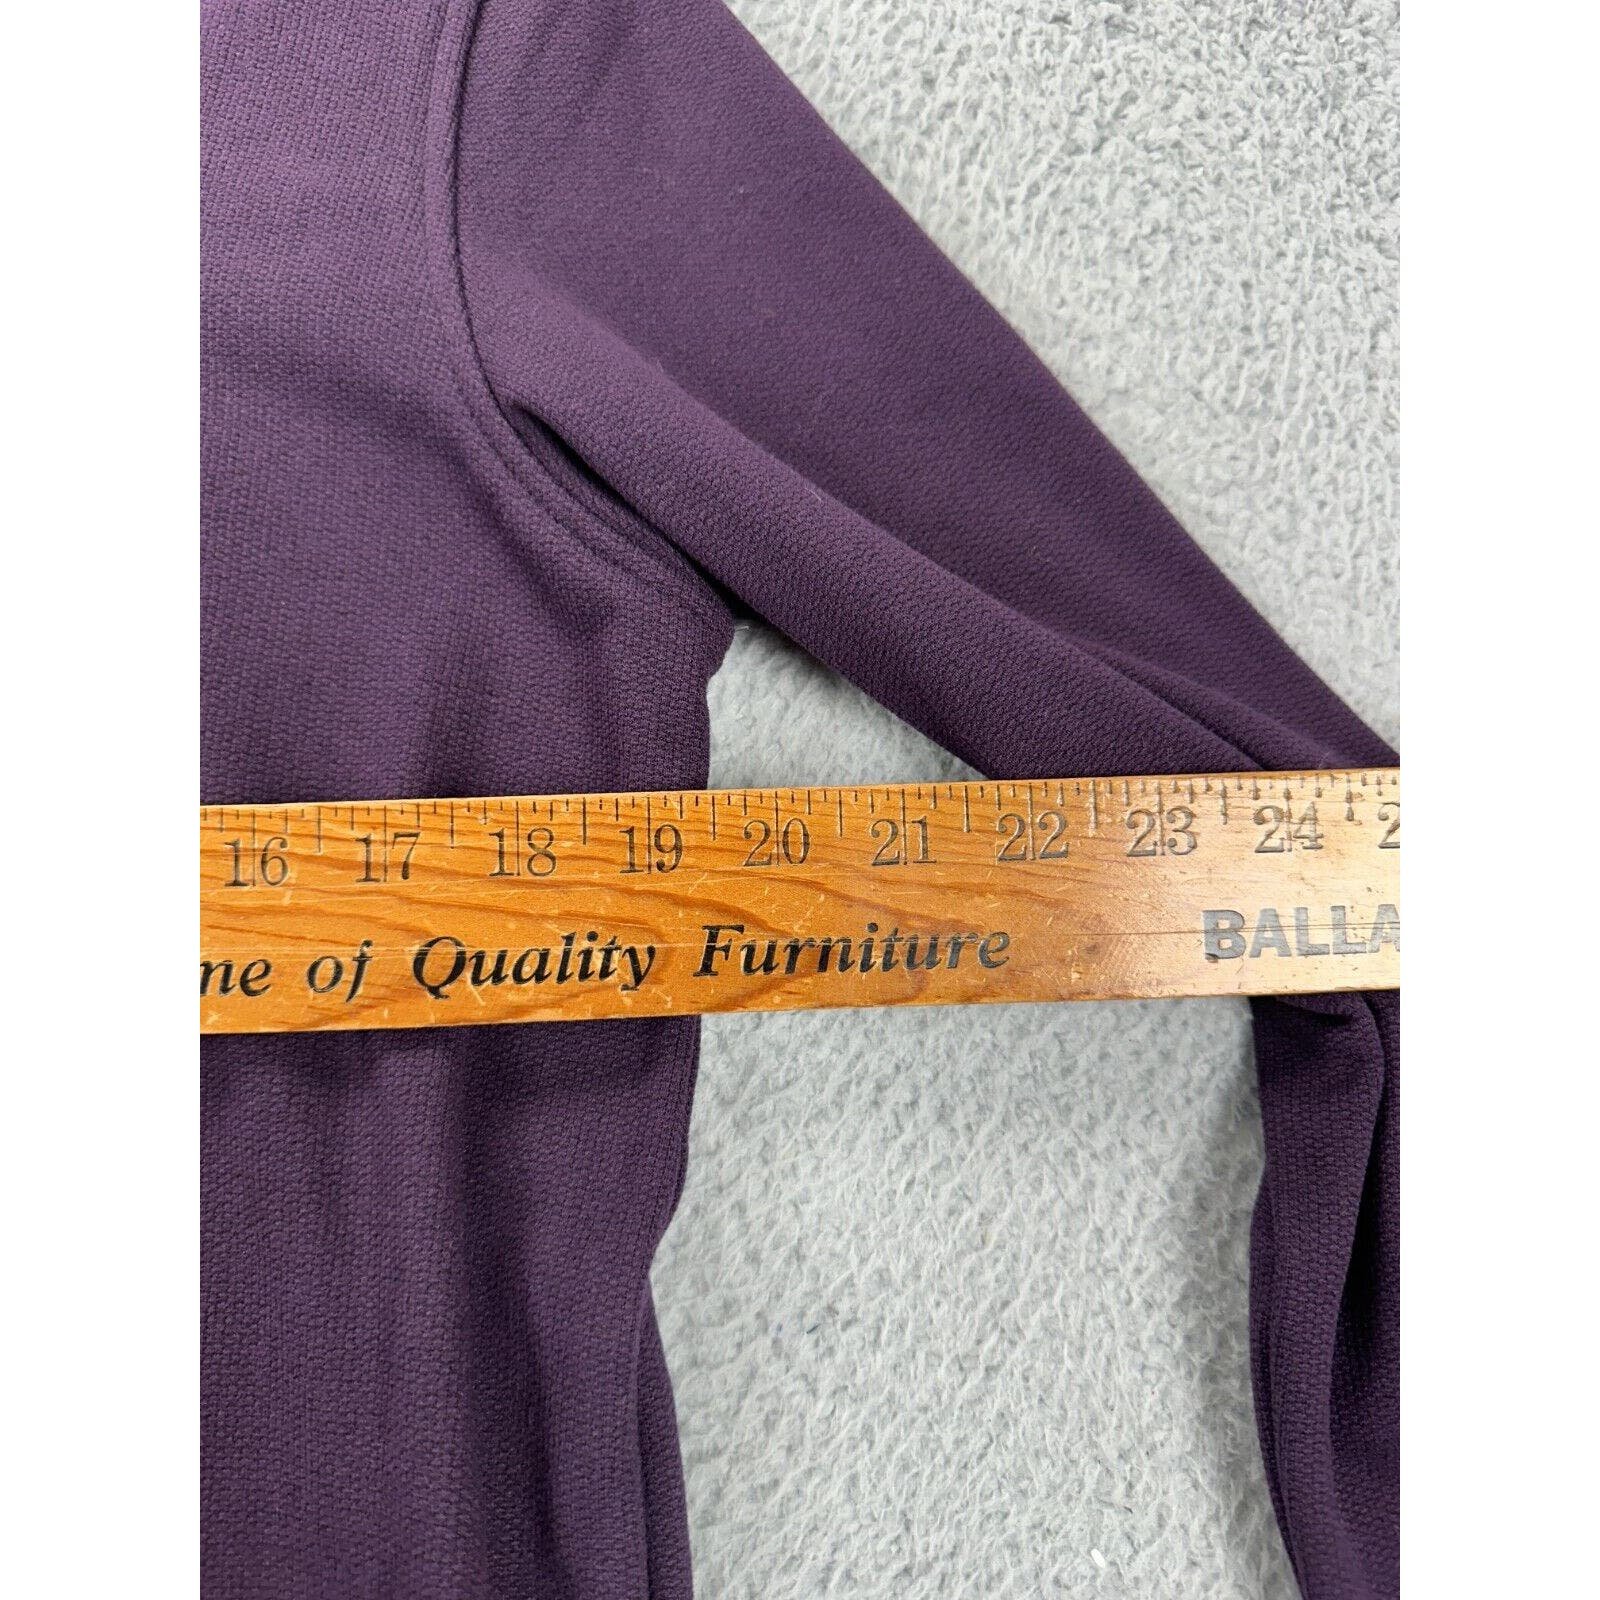 Classic The North Face Shirt Womens Medium Purple Hooded Long Sleeve Logo Activewear NEW I4crZcnKI Cheap